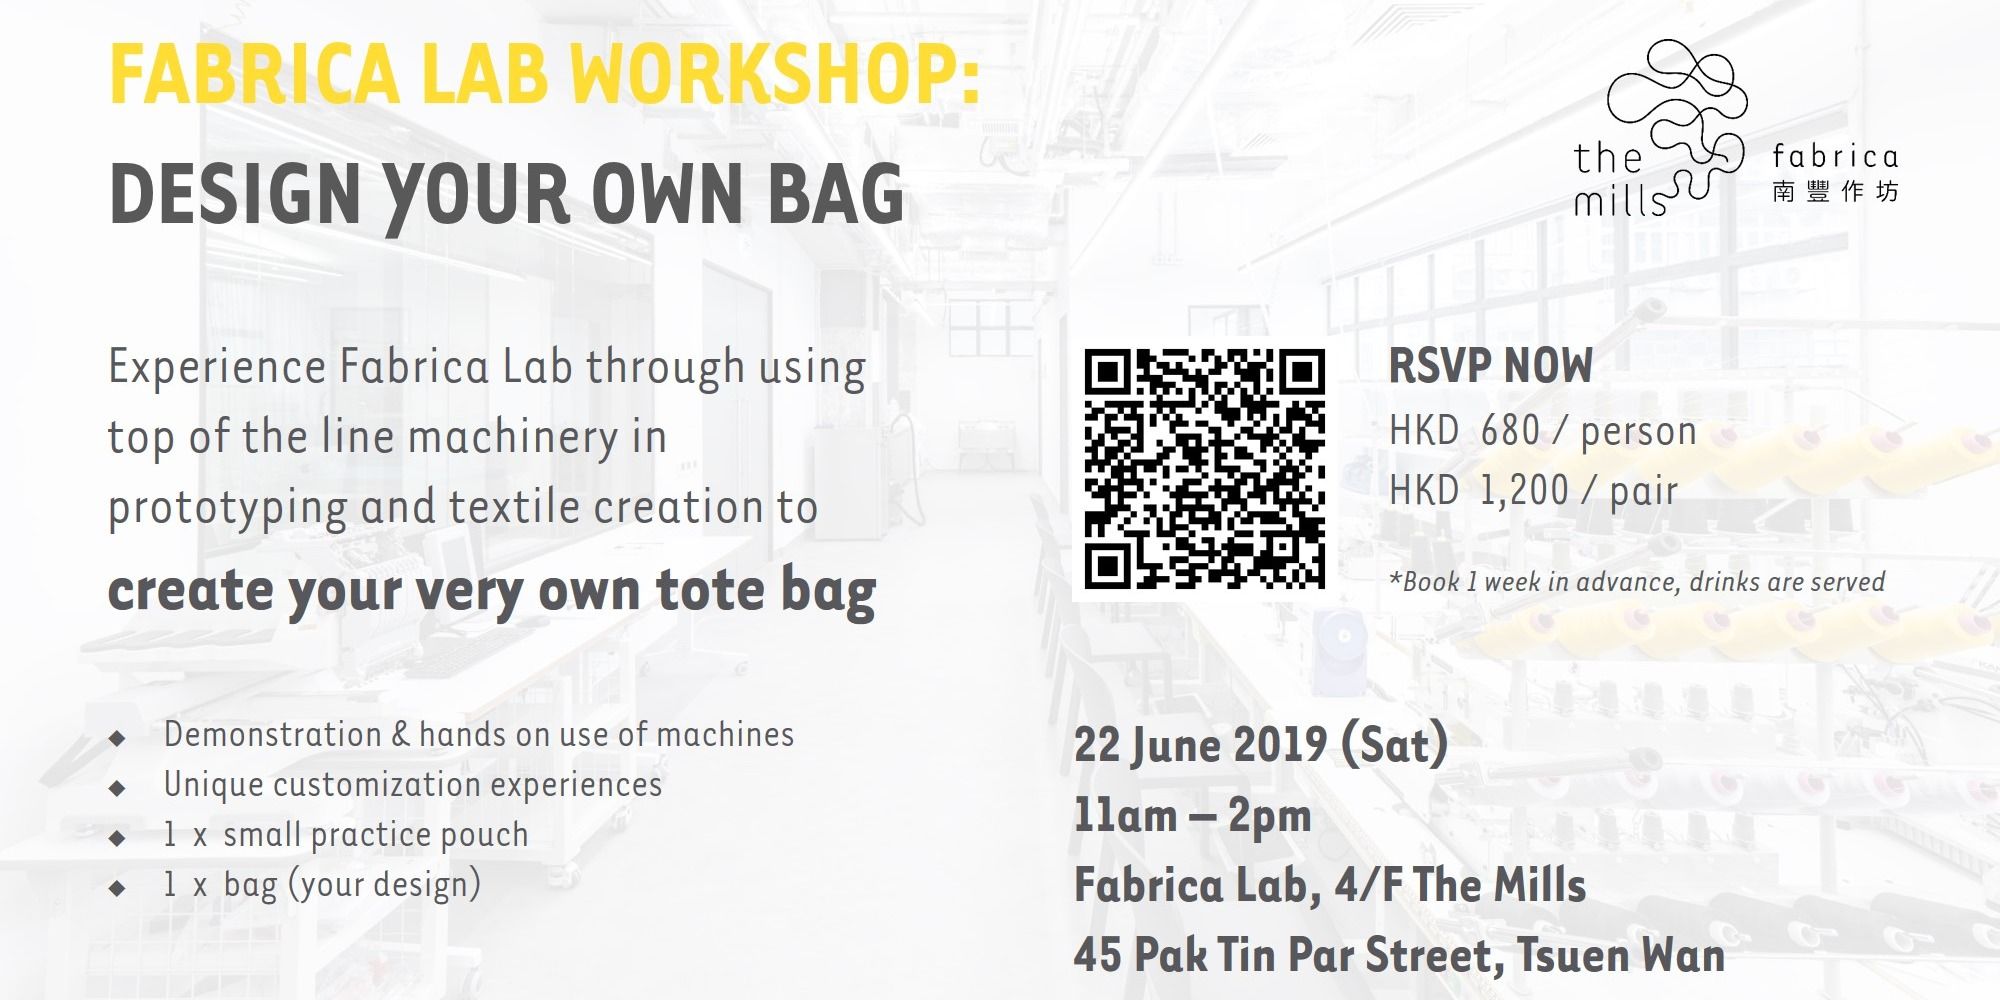 Fabrica Lab Workshop: Design Your Own Bag